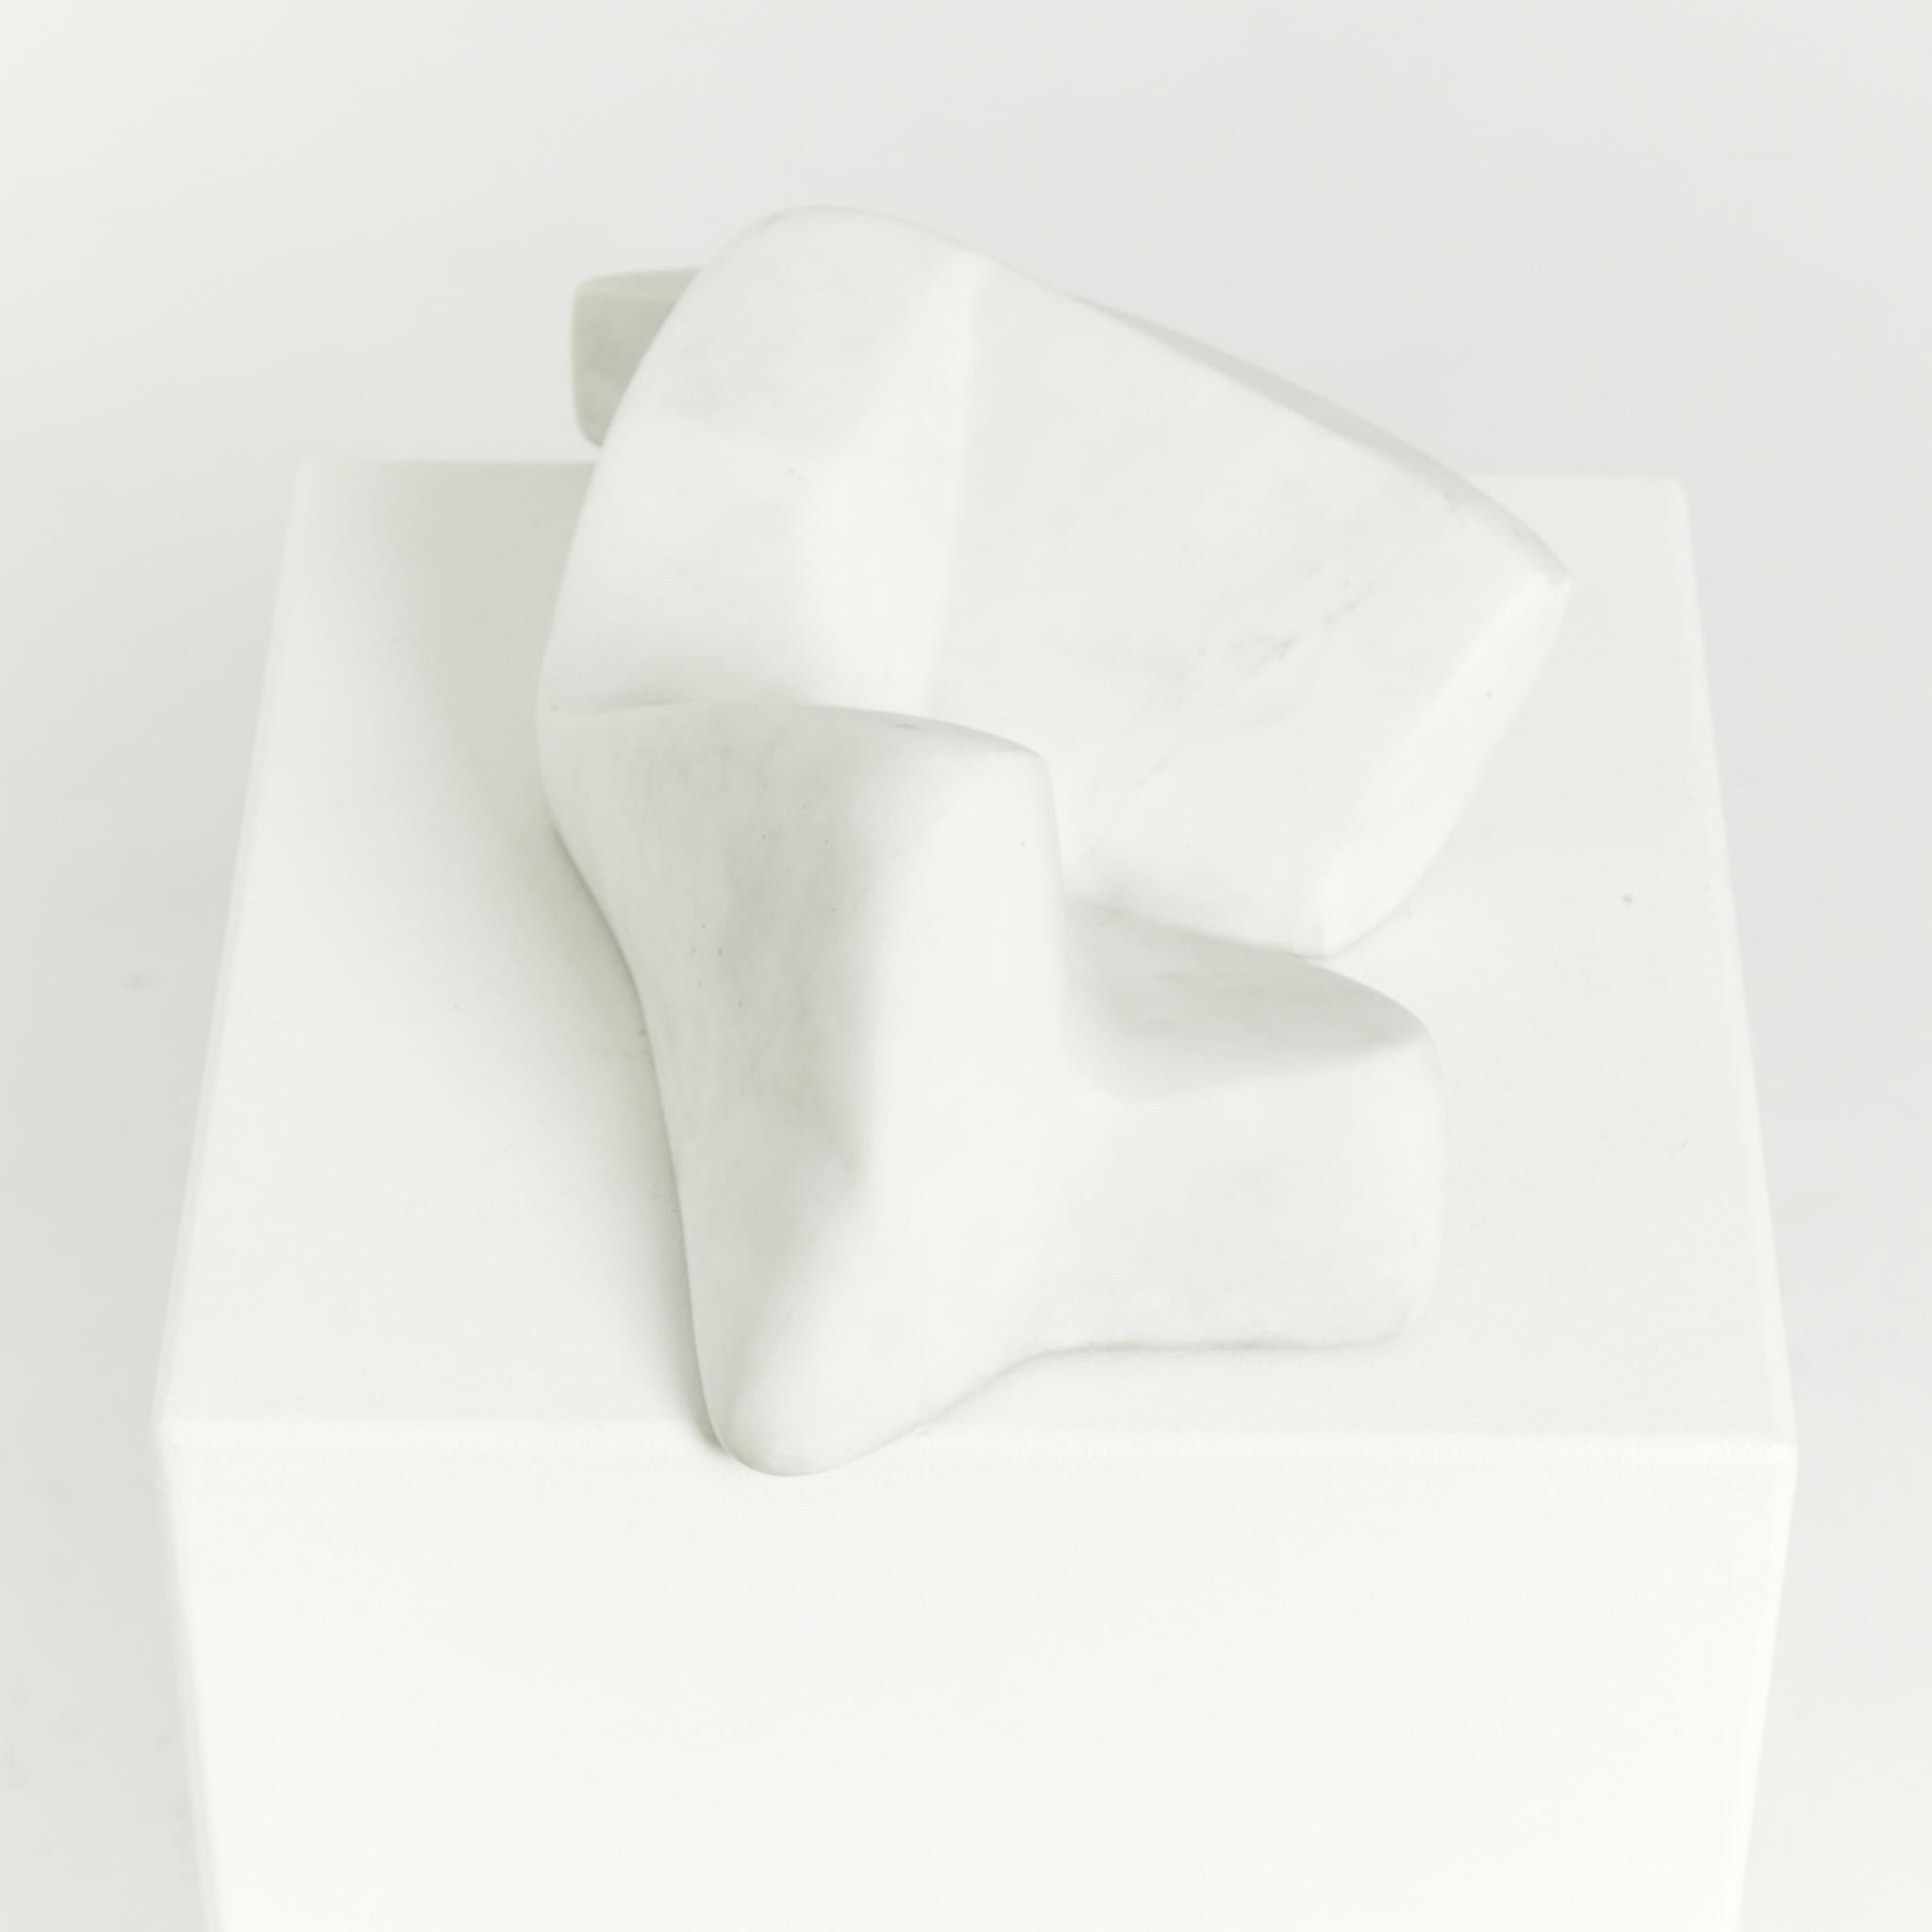 Angular Abstract Sculpture in Carrara Marble 7